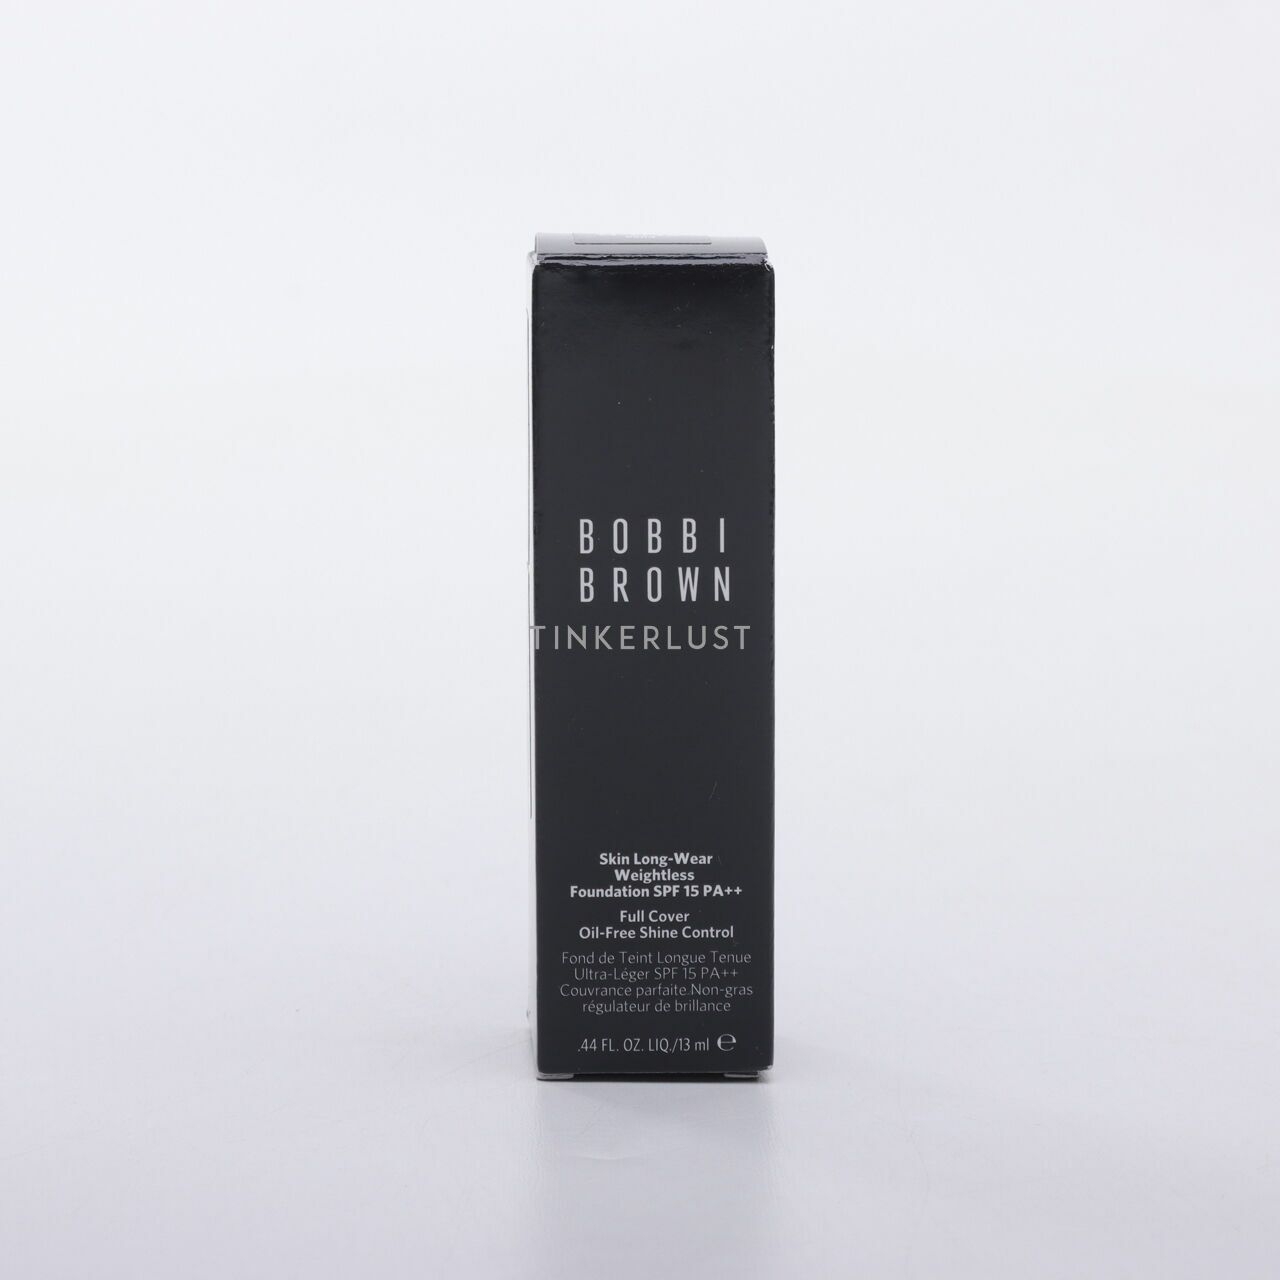 Bobbi Brown Skin Long-Wear Weightless Foundation SPF 15 PA++ N-032 Sand Faces